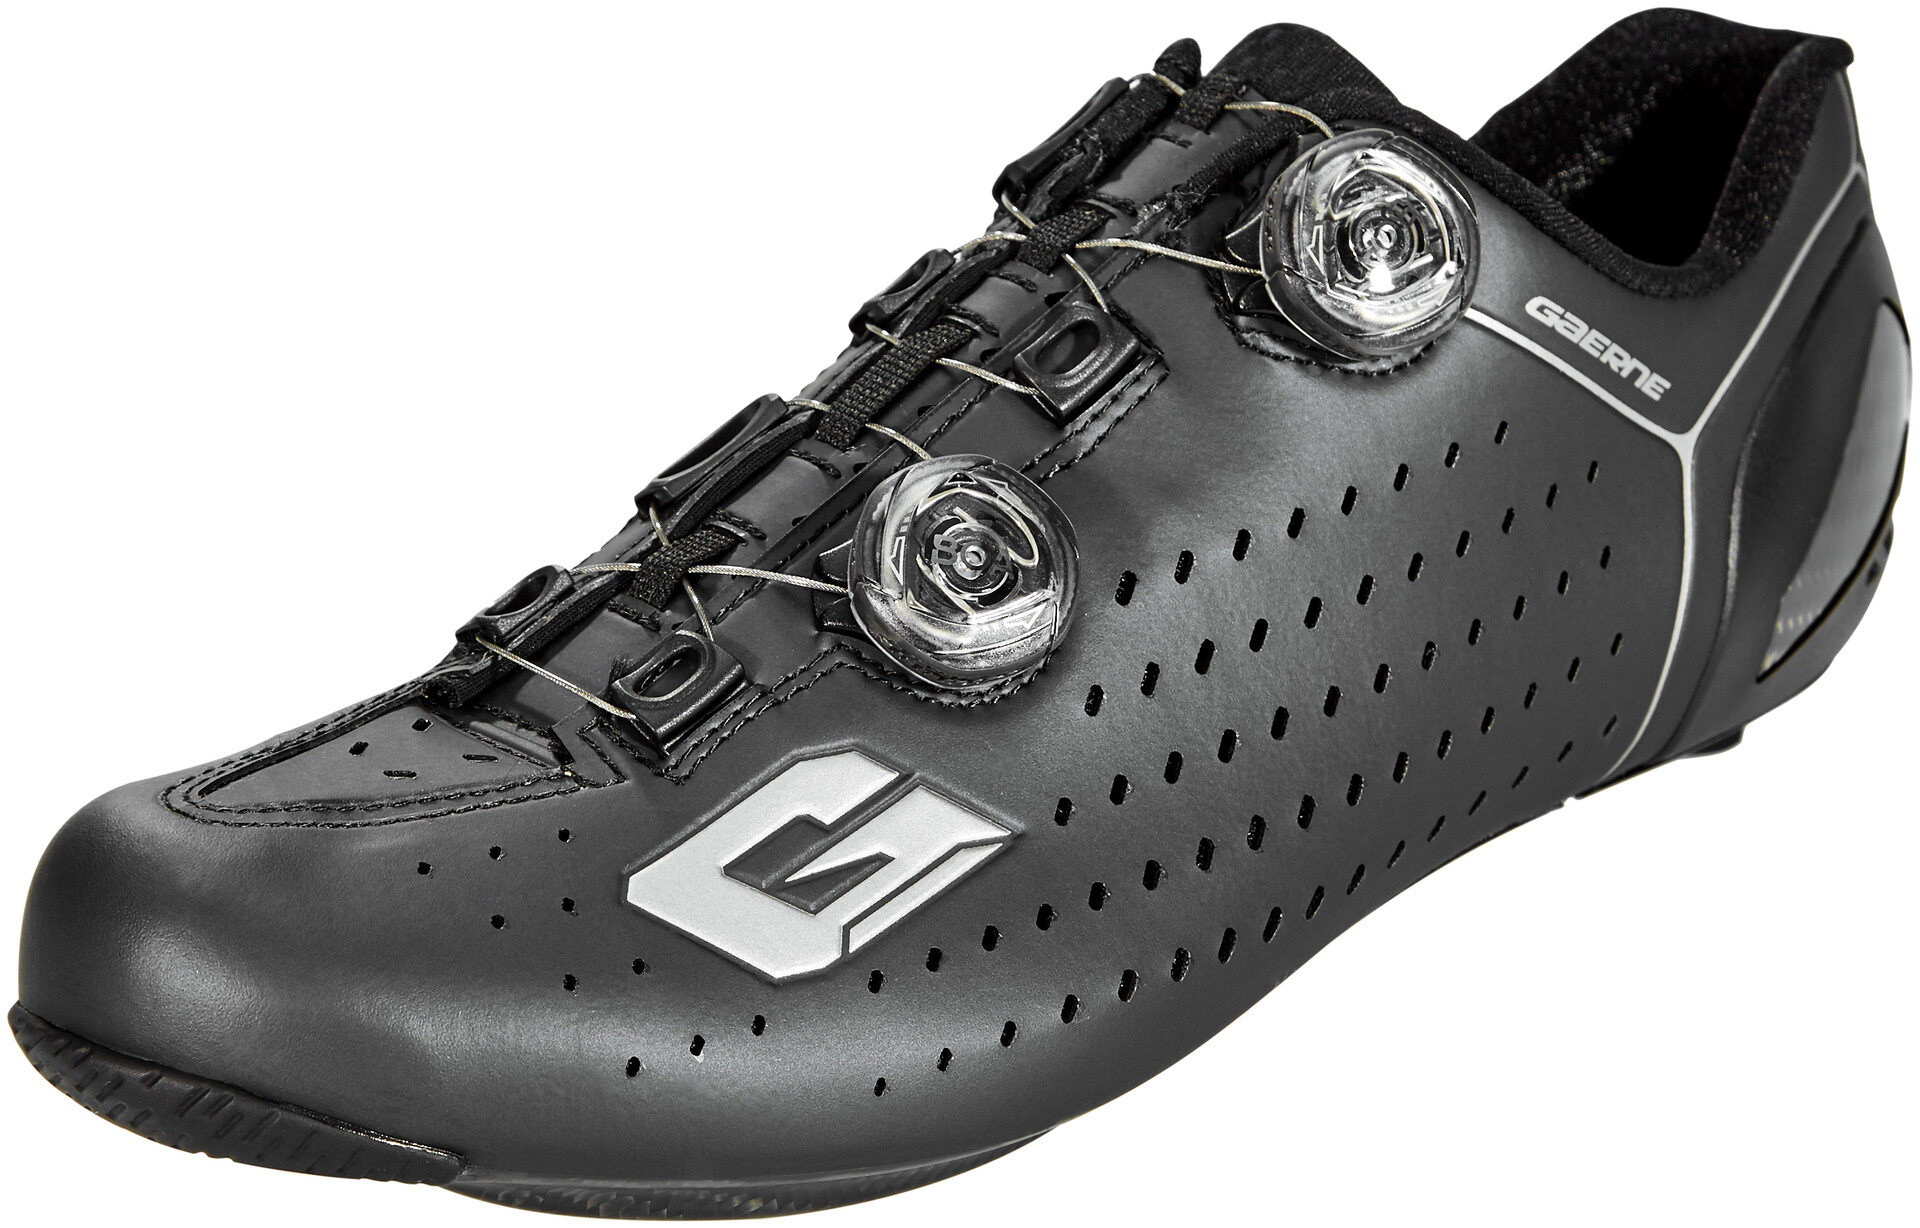 Gaerne Carbon G.Stilo Cycling Shoes Men 